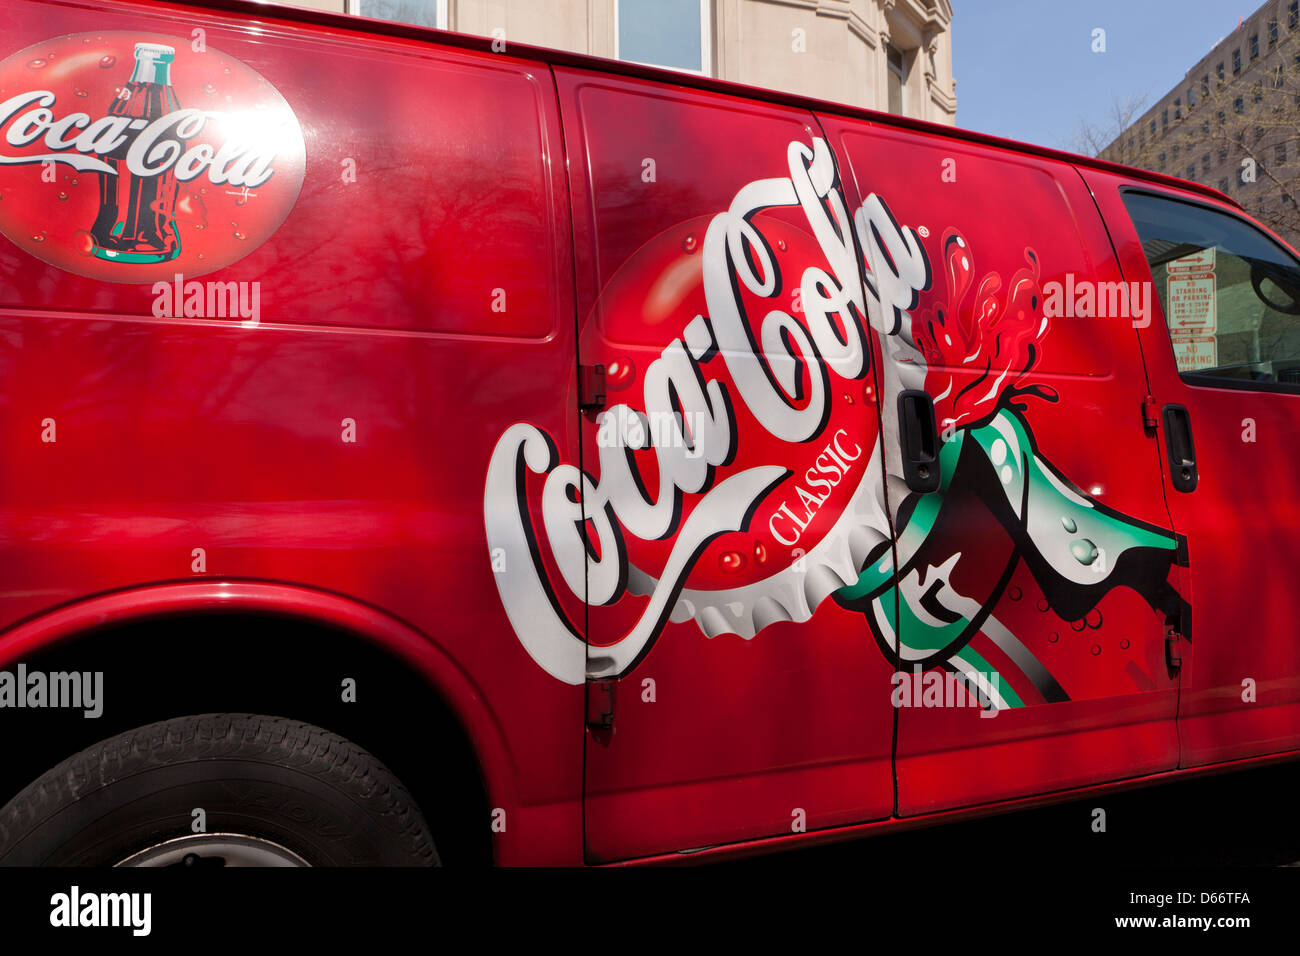 Coca Cola delivery van - USA Stock Photo